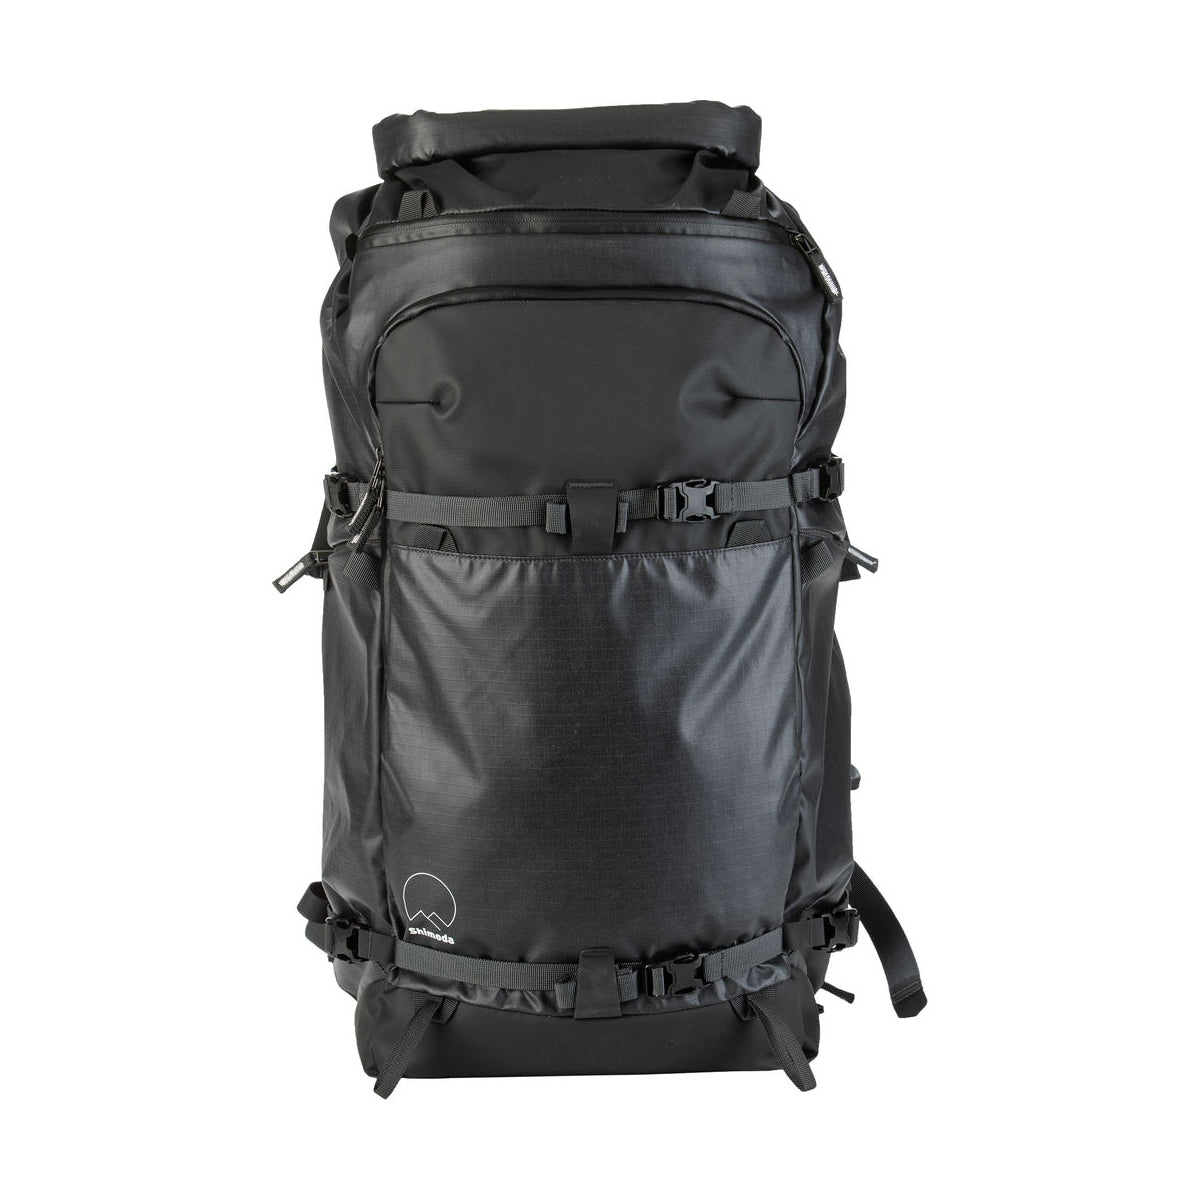 Shimoda Designs Action X70 Backpack - Black